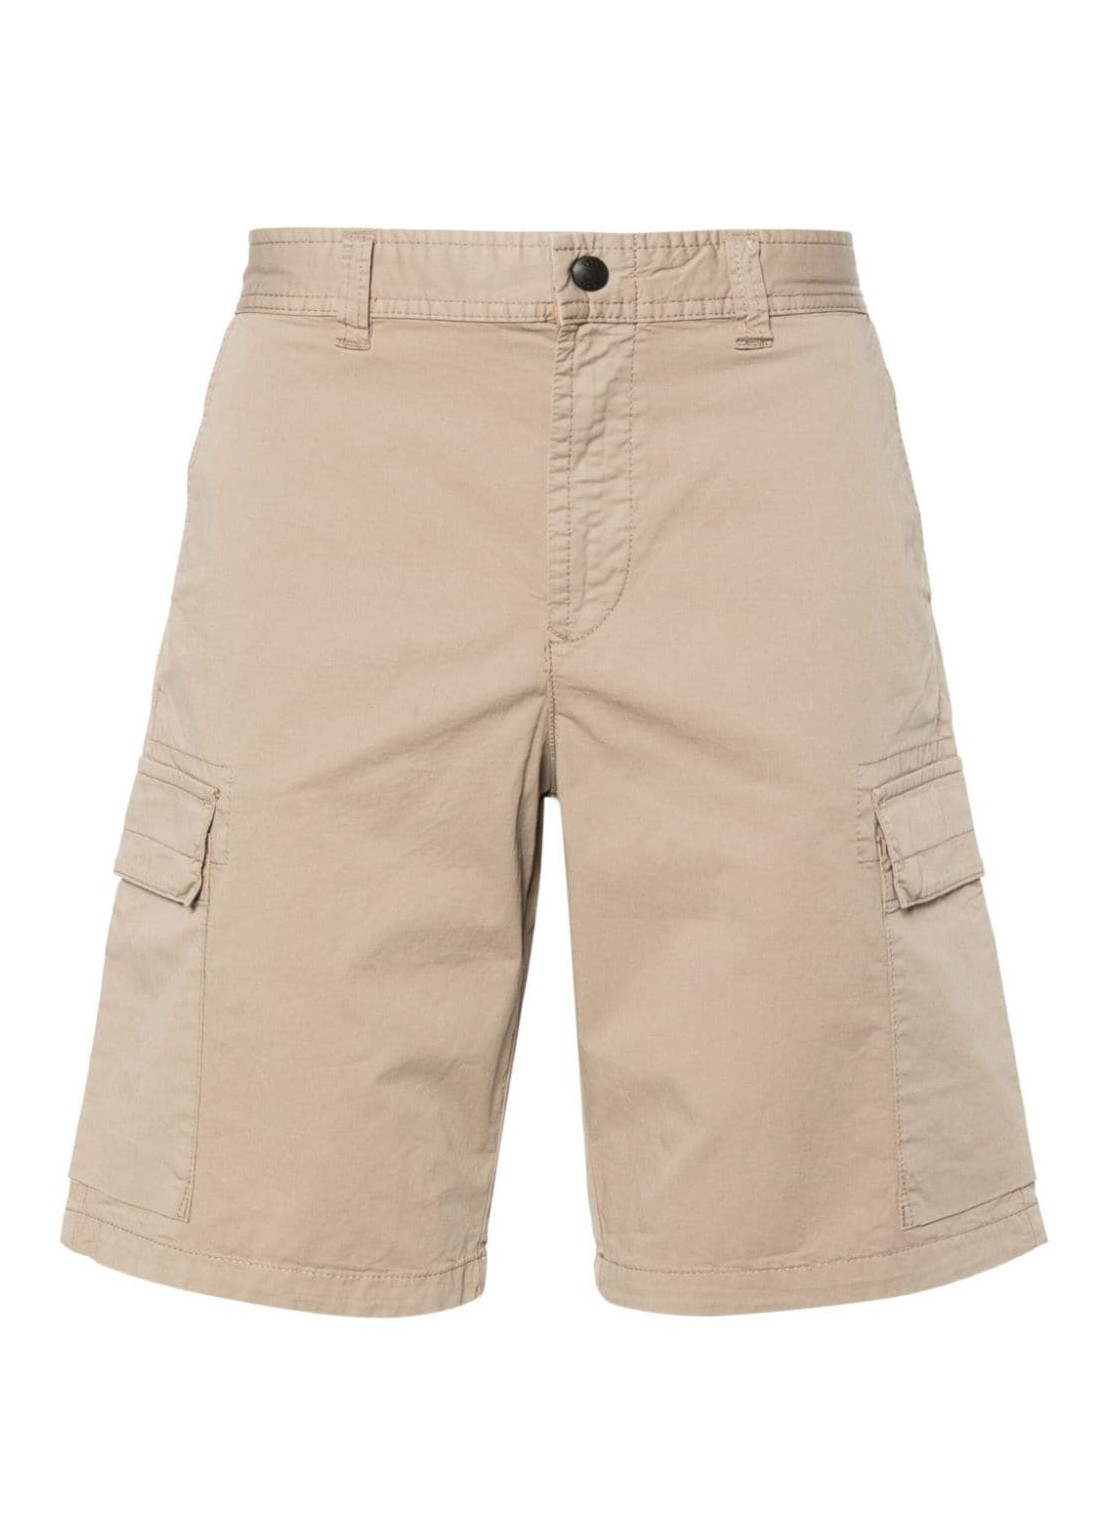 Pantalon corto boss short pant mansisla-6-cargo-shorts - 50510866 246 talla marron
 